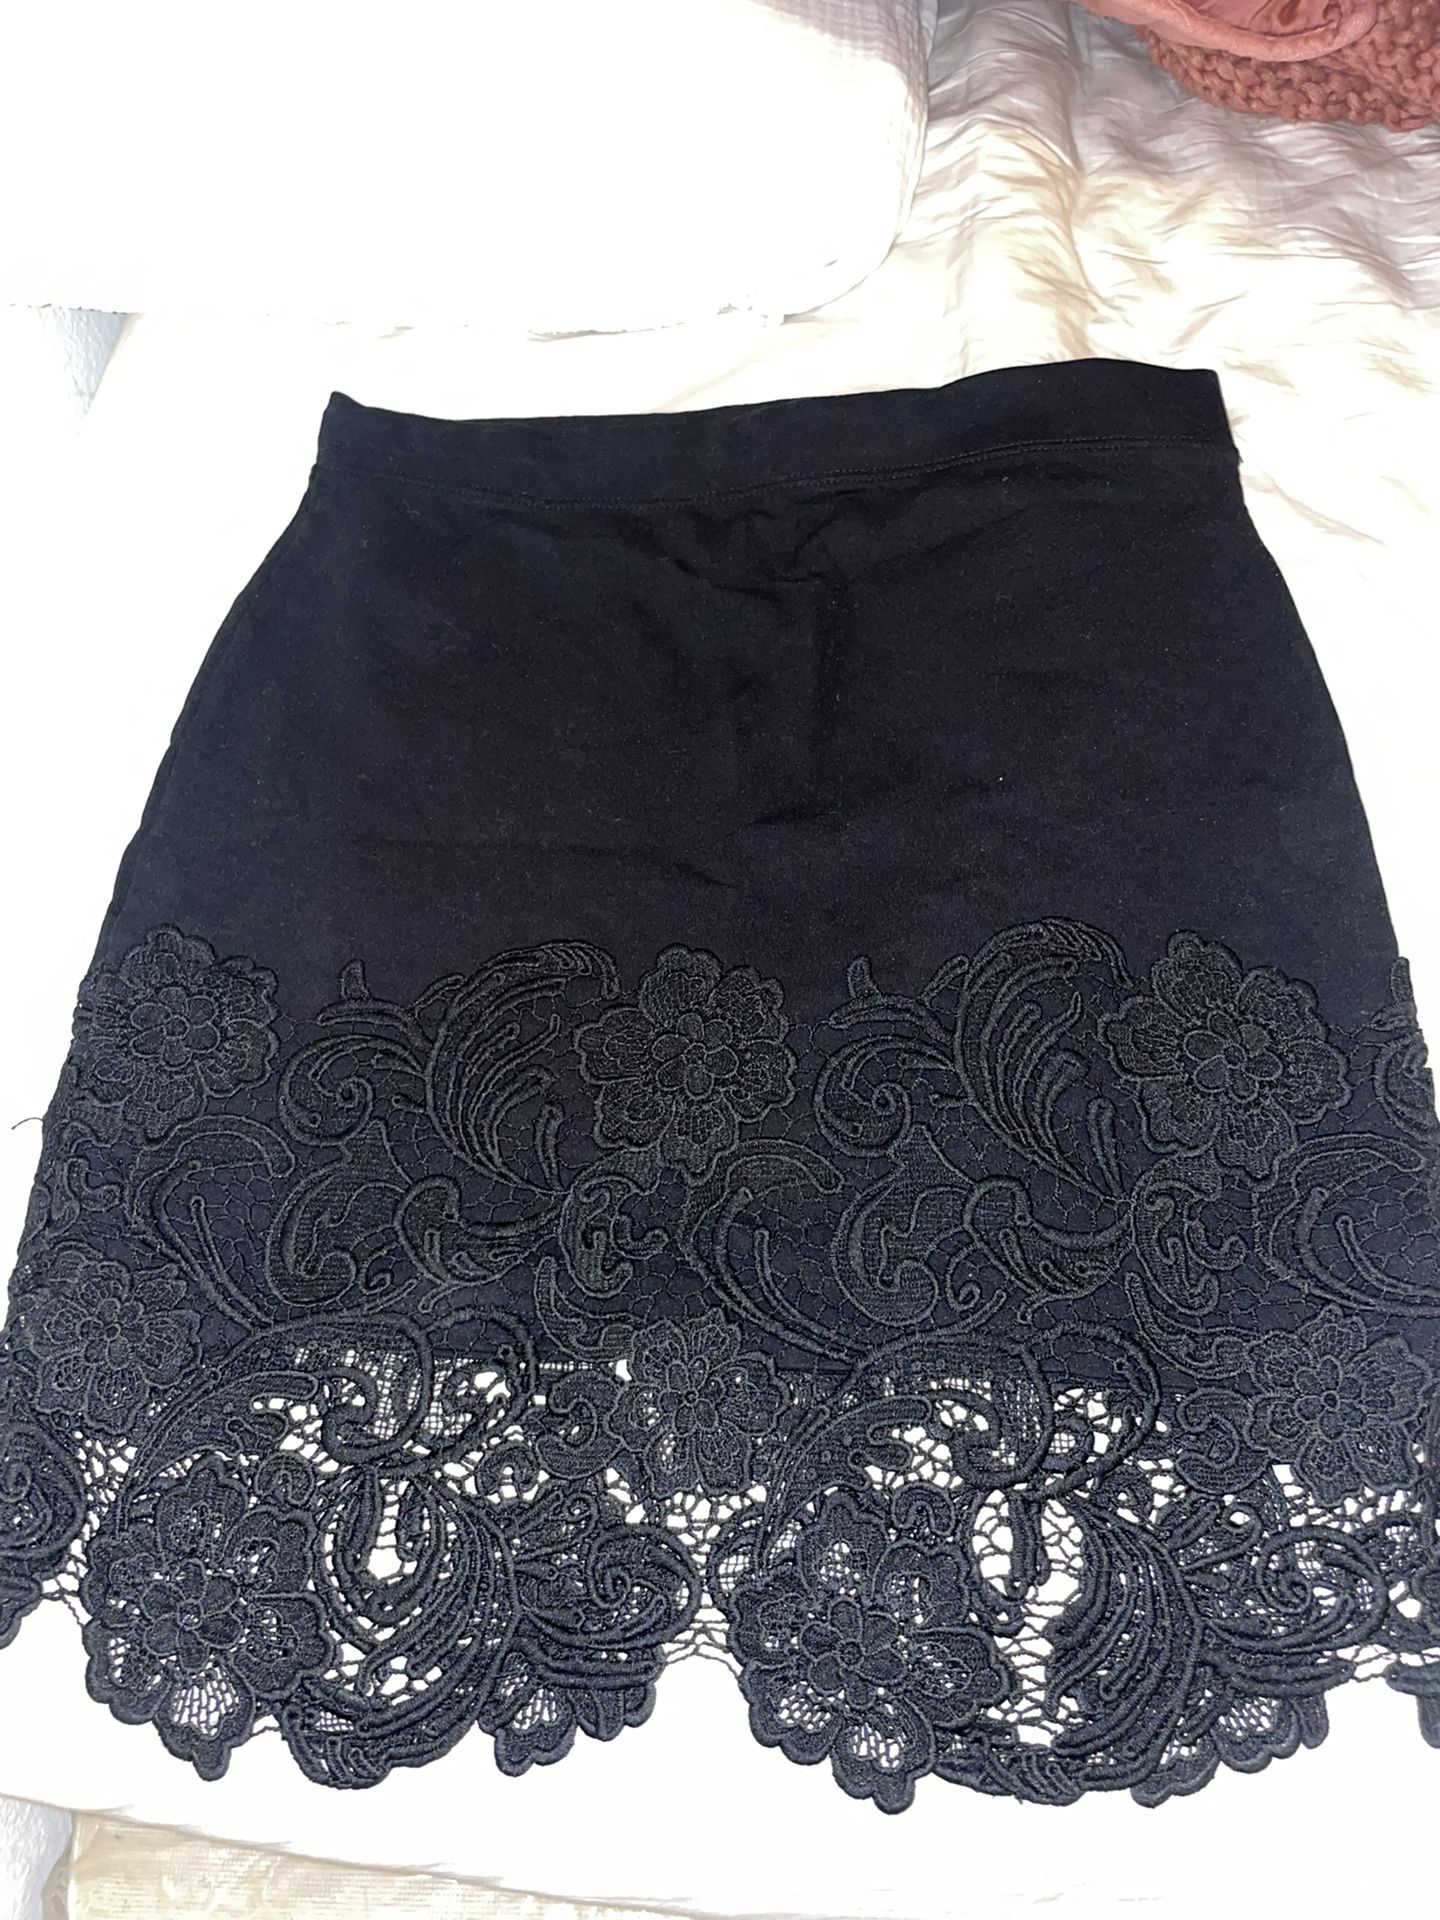 Lace Pencil Skirt XL